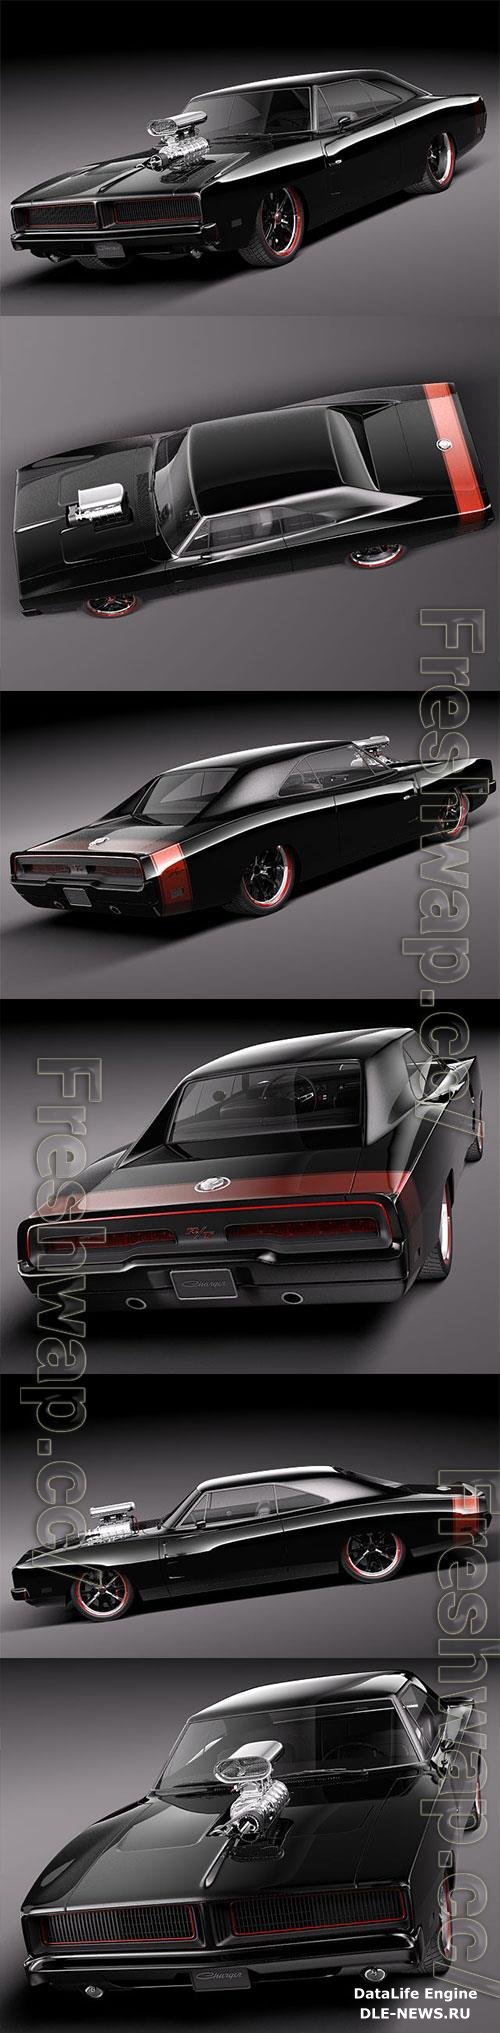 Dodge Charger 1969 custom 3D Model